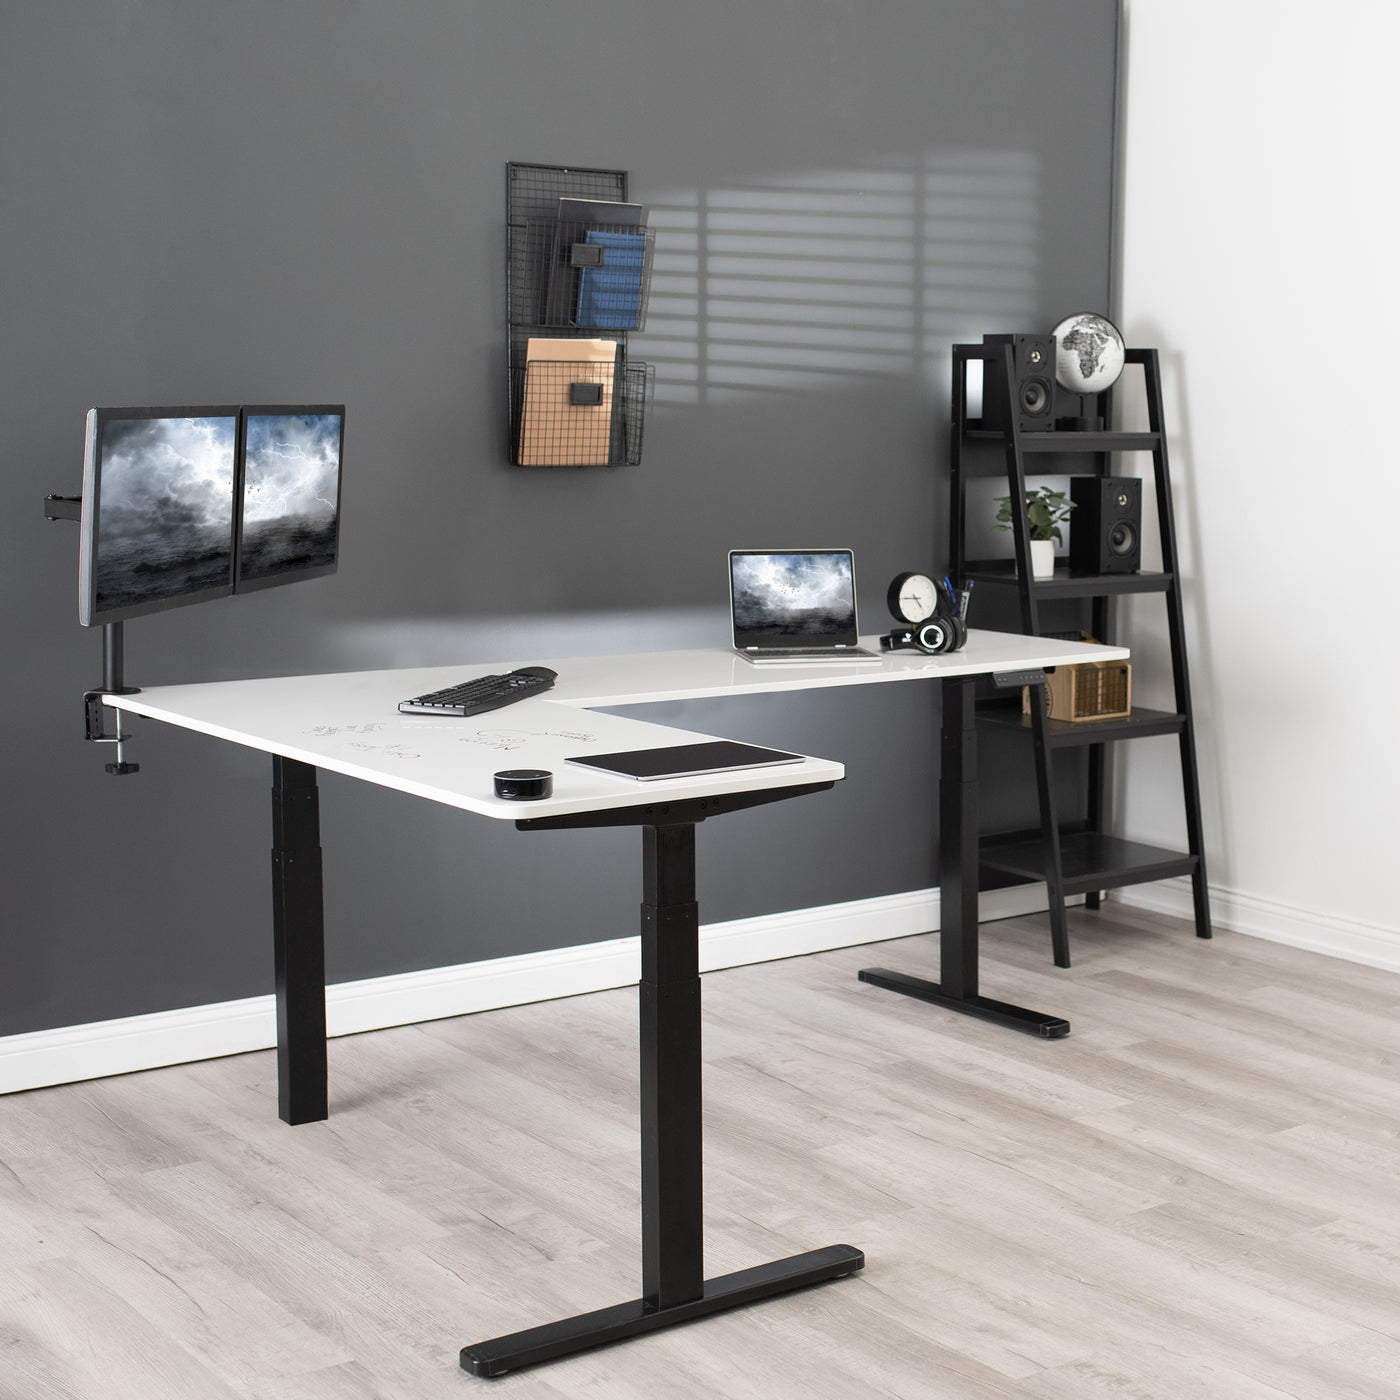 Large sturdy height adjustable corner desk workstation with memory controller.